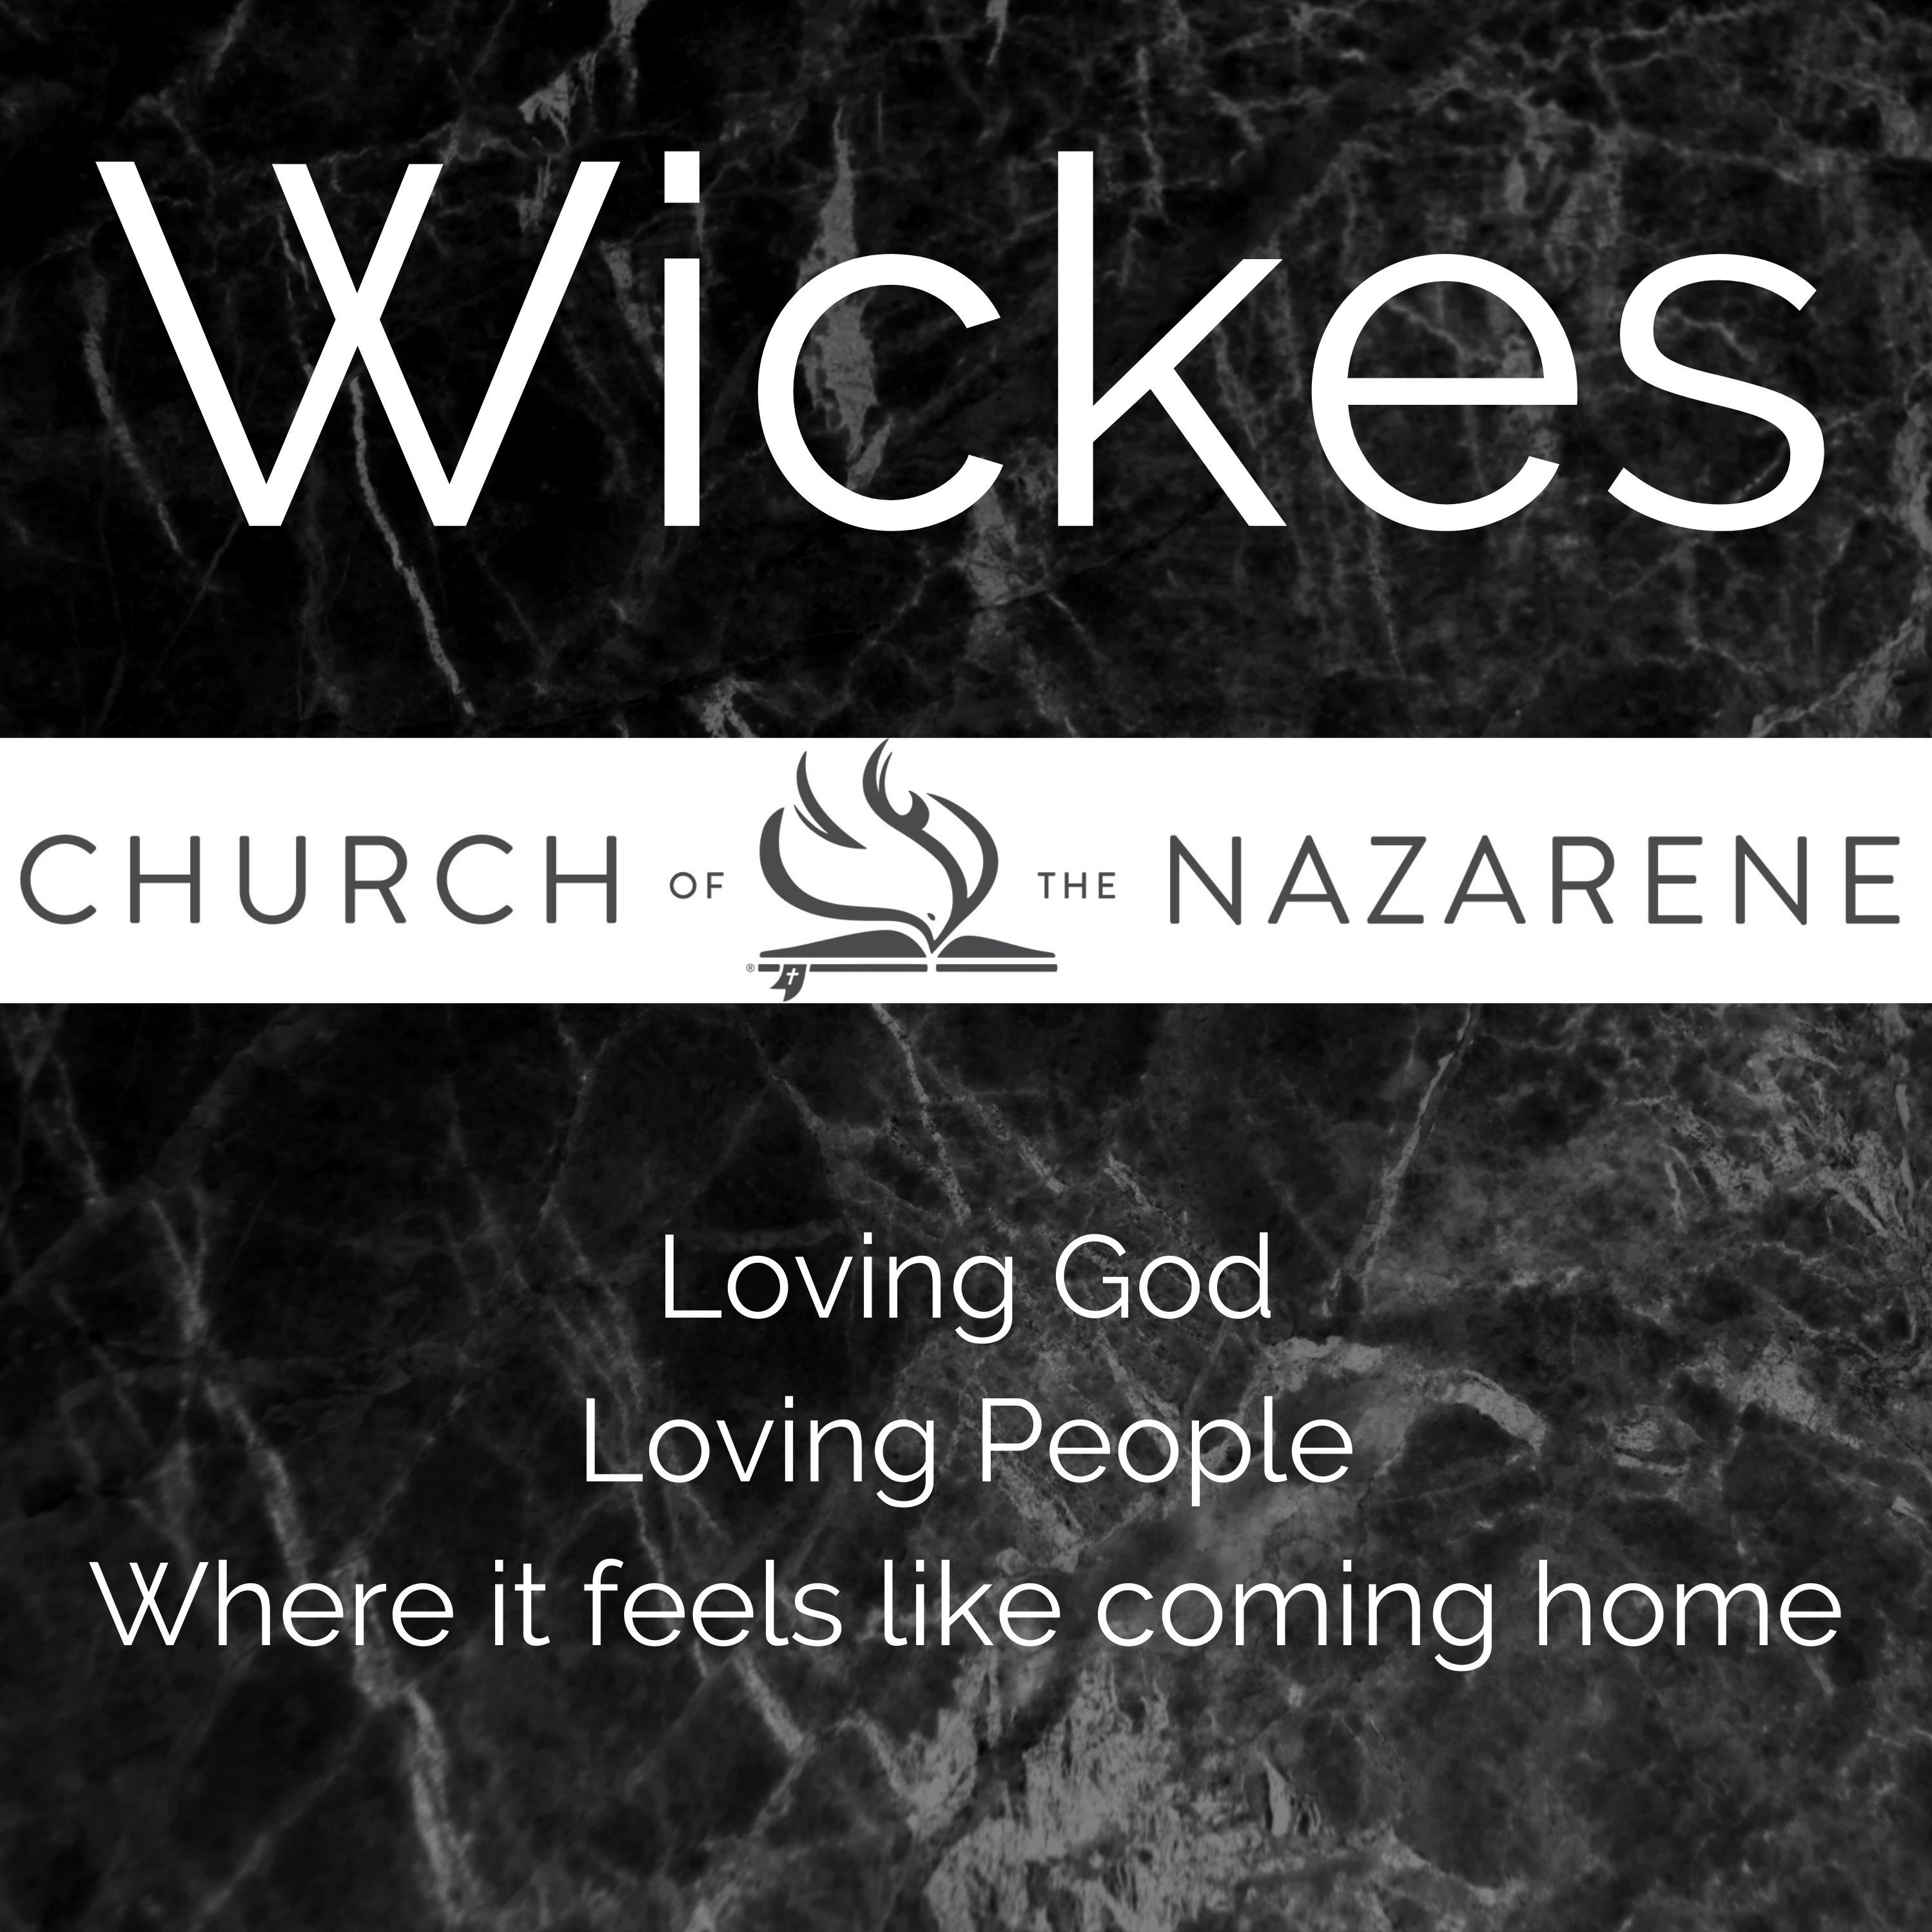 Wickes Church of The Nazarene